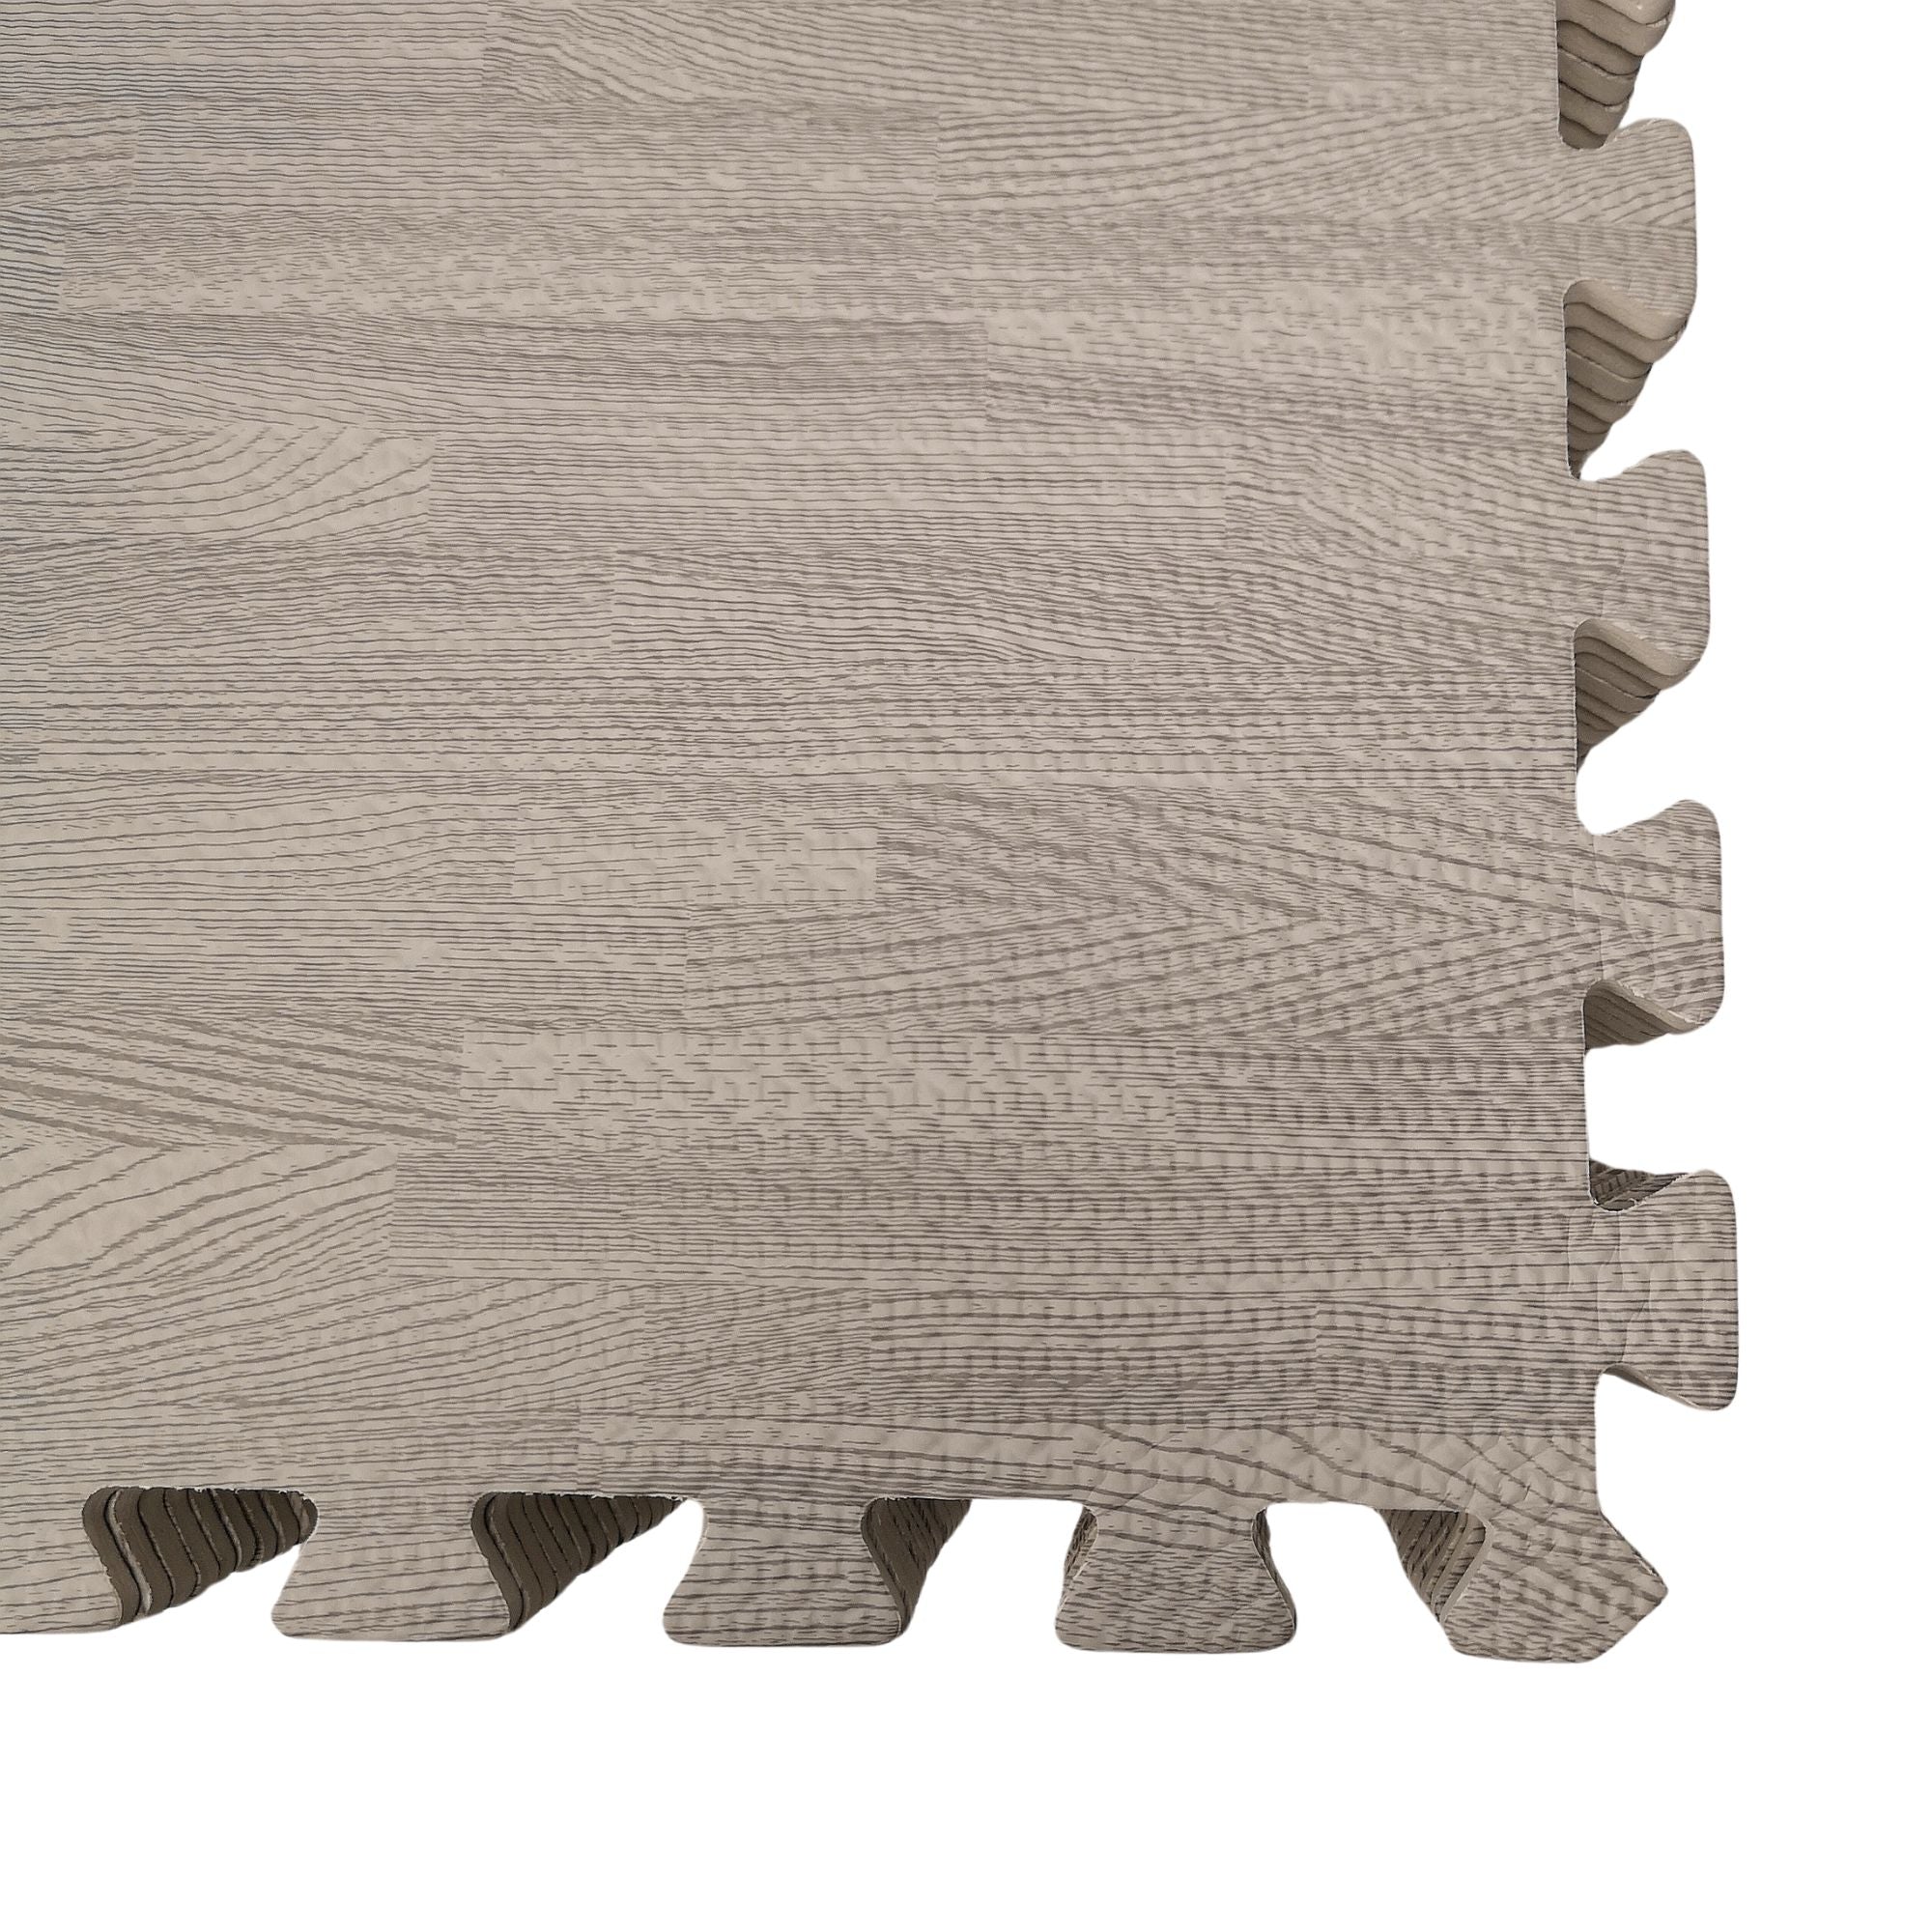 12 Piece Grey Wood Effect EVA Foam Floor Protective Floor Tiles / Mats 60x60cm Each Set For Gyms, Kitchens, Garages, Camping, Kids Play Matting, Flooring Mats Set Covers 4.32 sqm (46.5 sq ft)